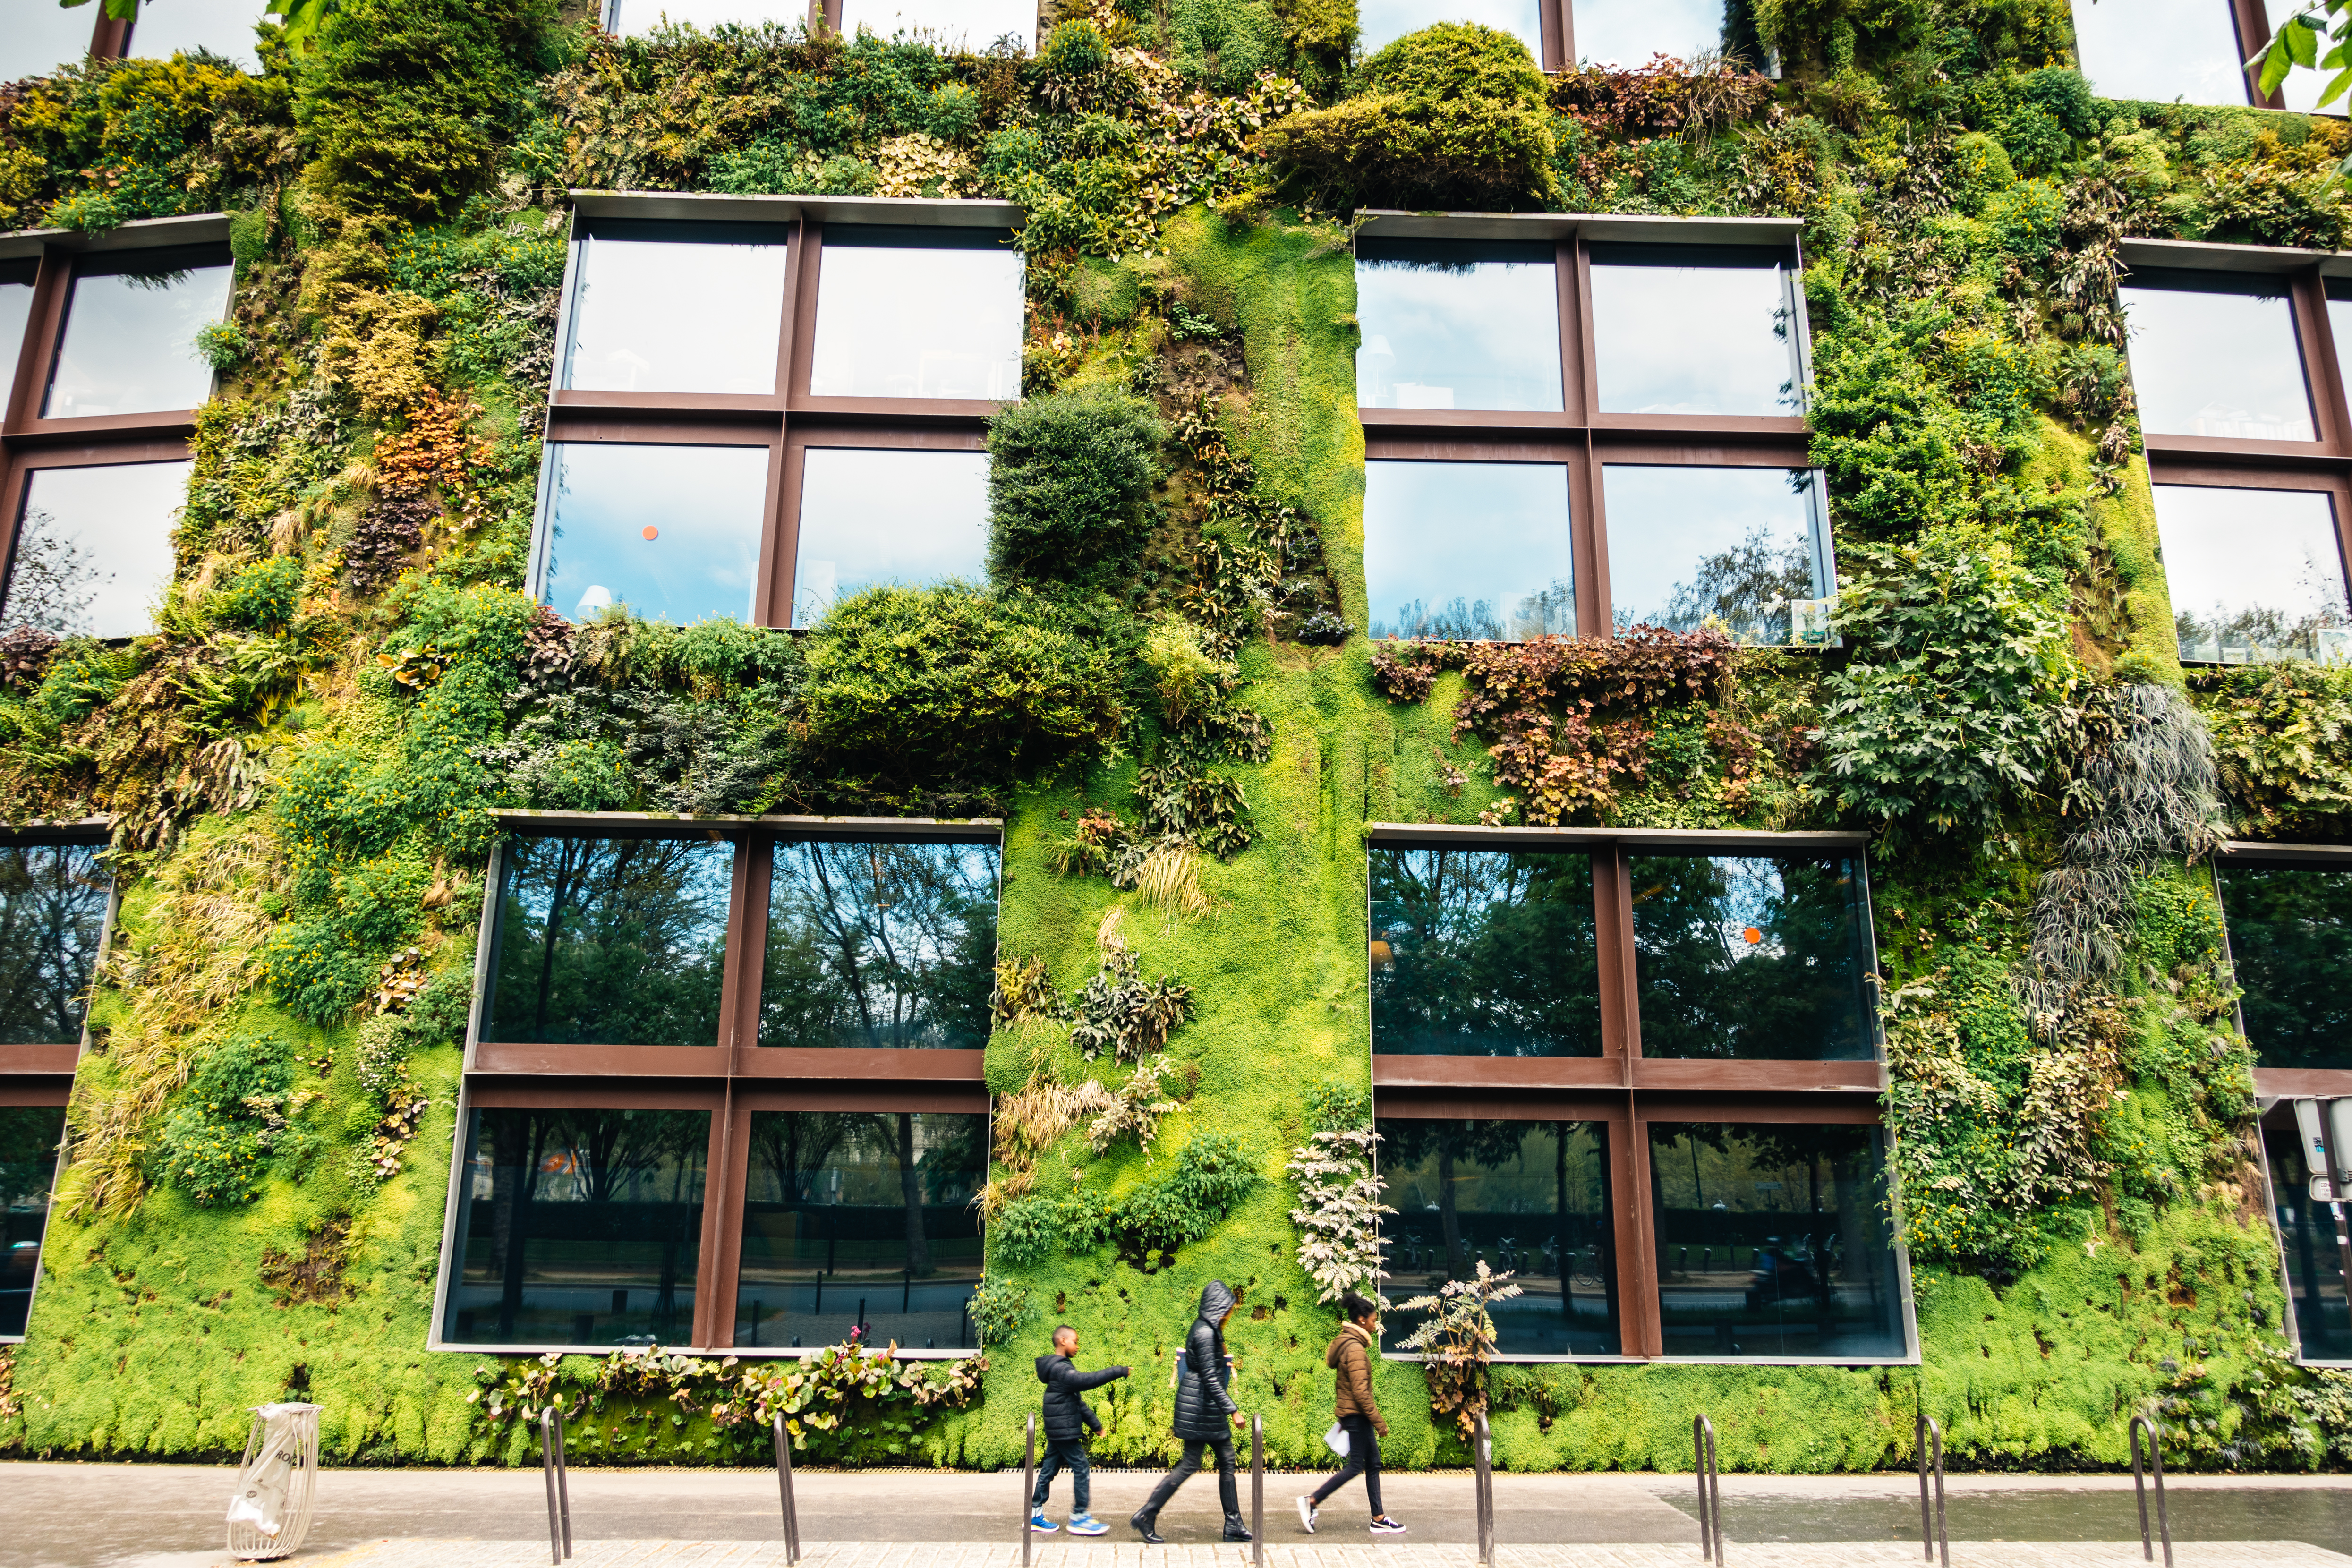 Green building in paris